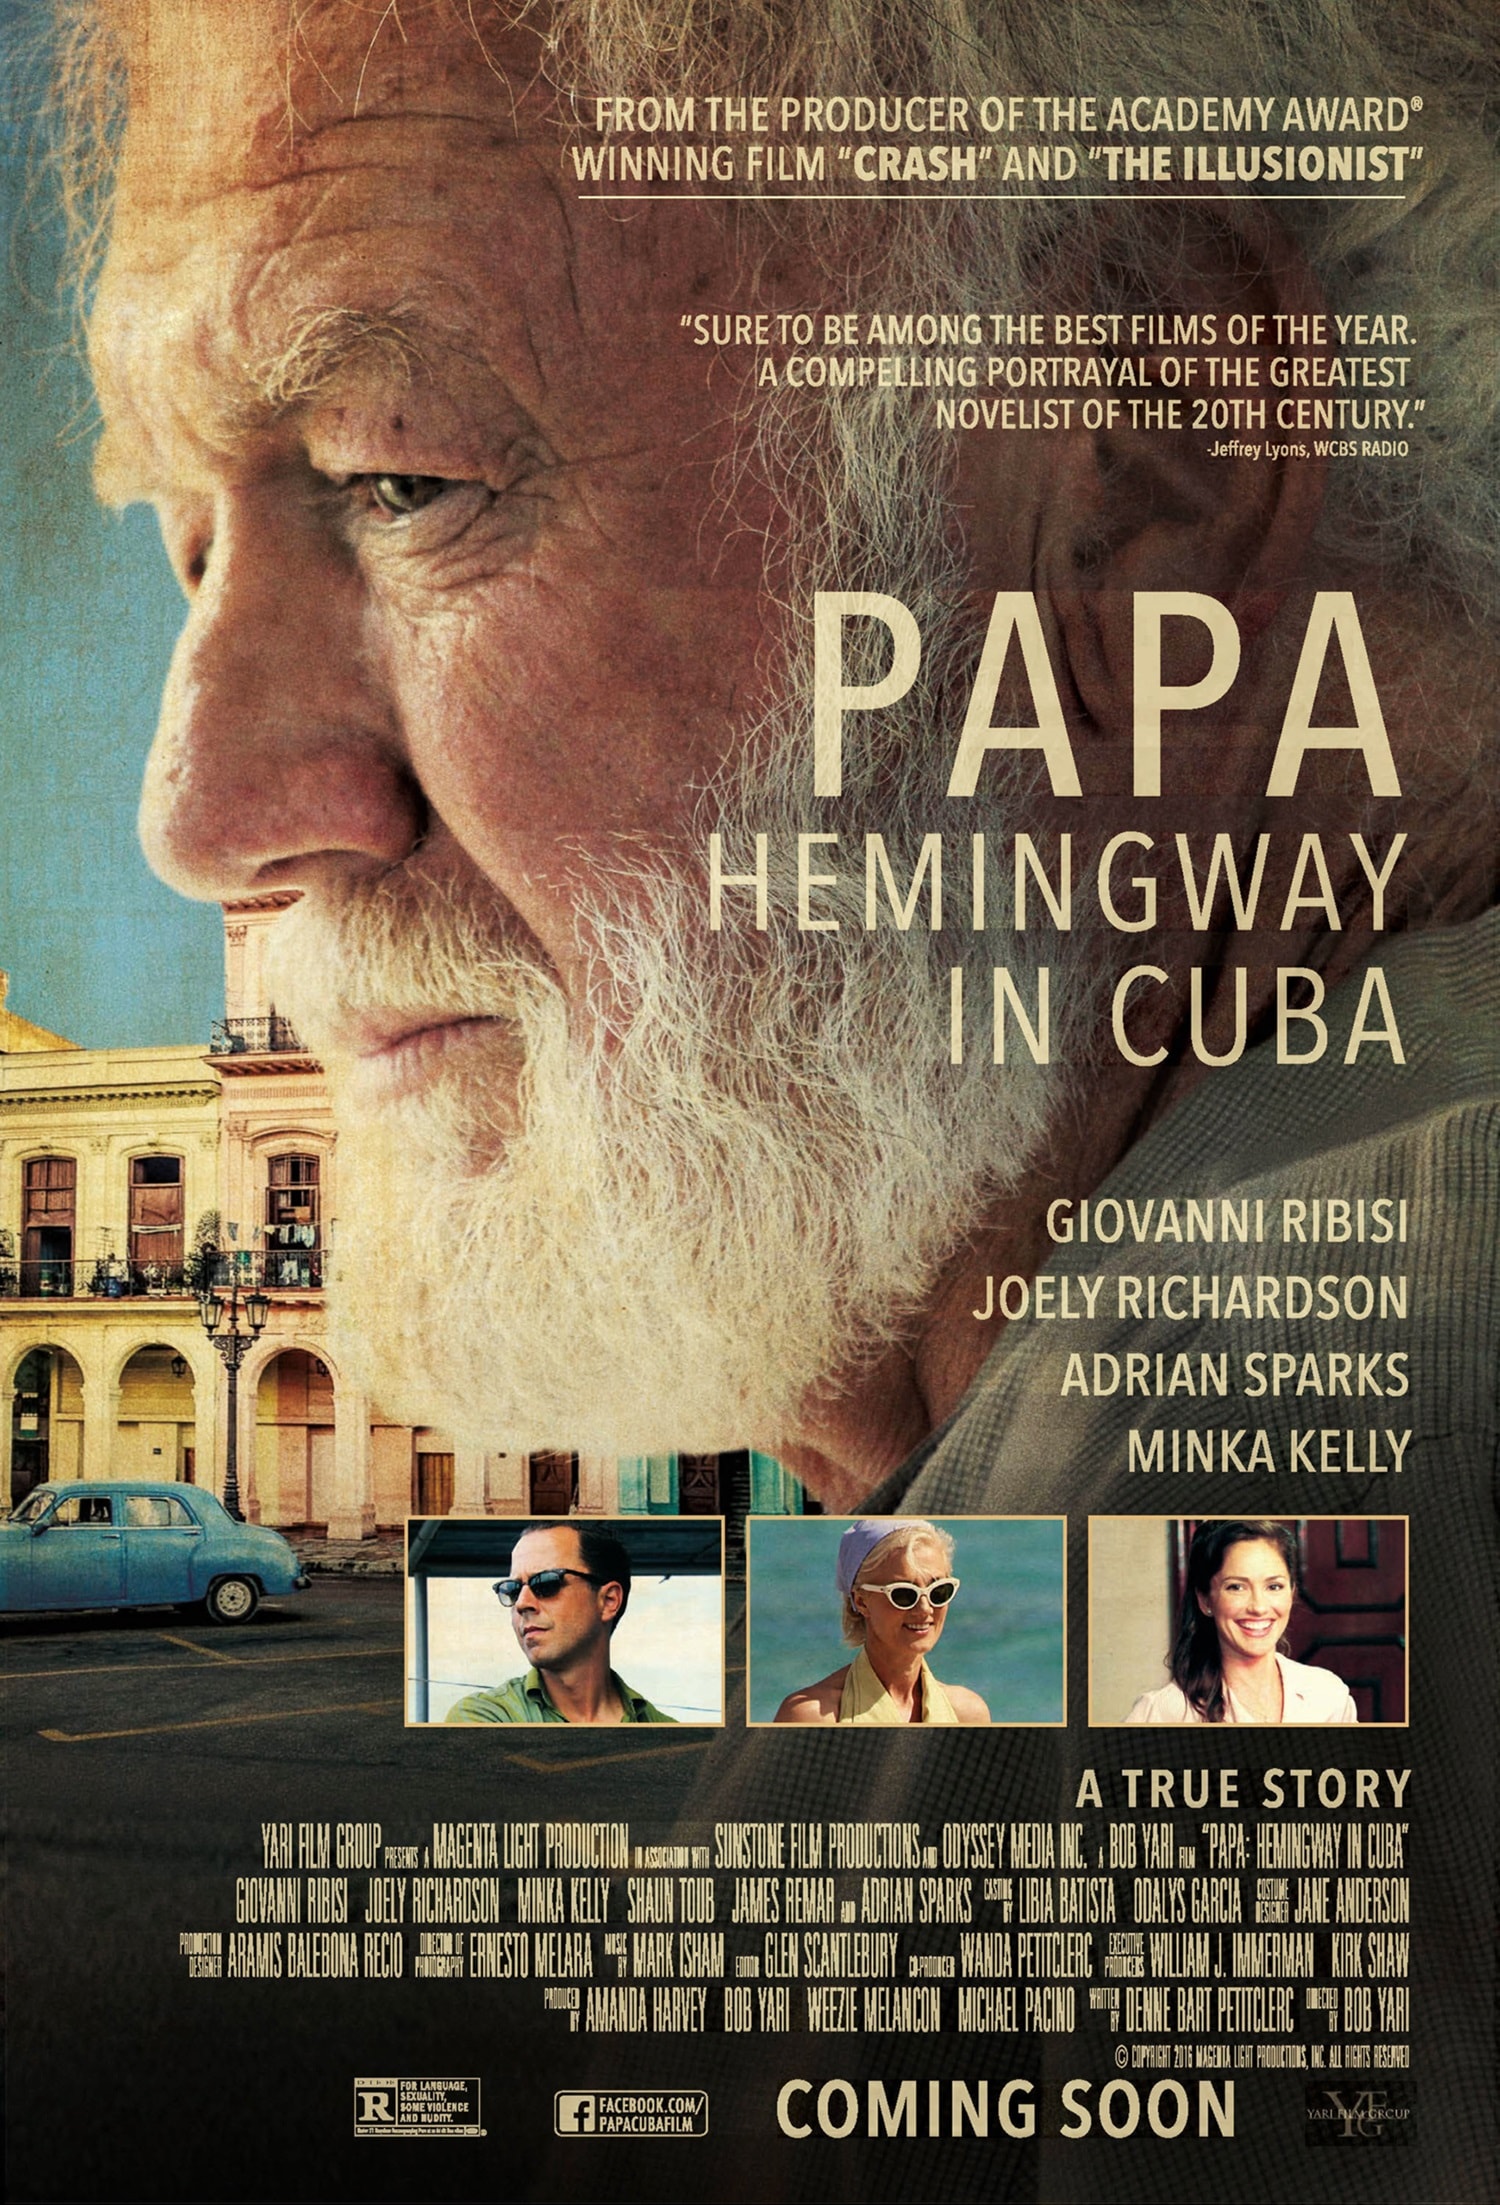 La locandina del film del 2015 Papa Hemingway in Cuba, interpretato da Adrian Sparks